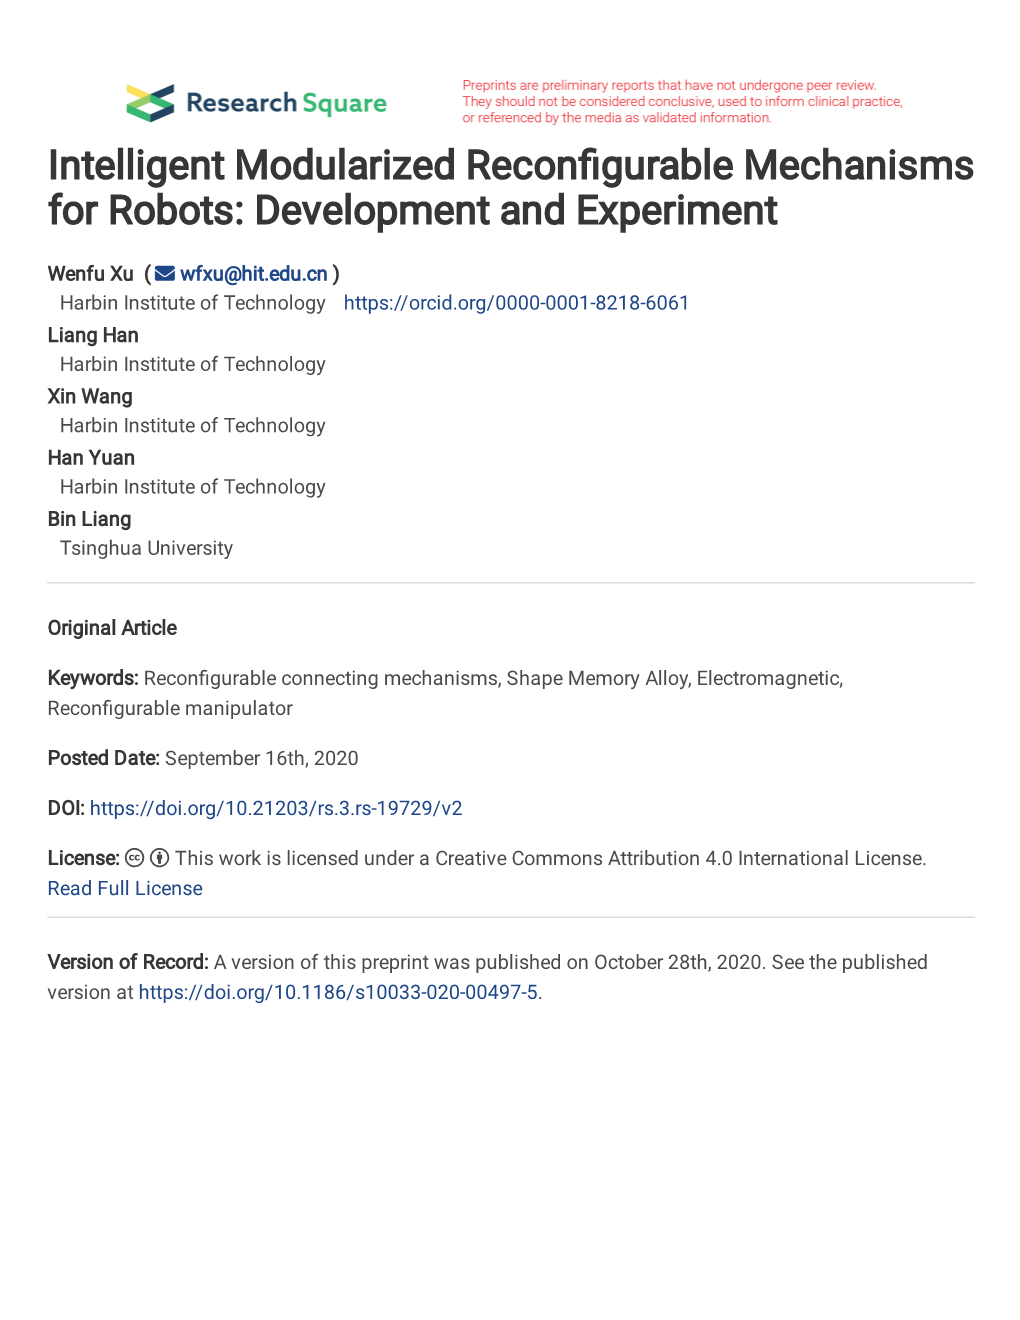 Intelligent Modularized Reconfigurable Mechanisms for Robots: Development and Experiment